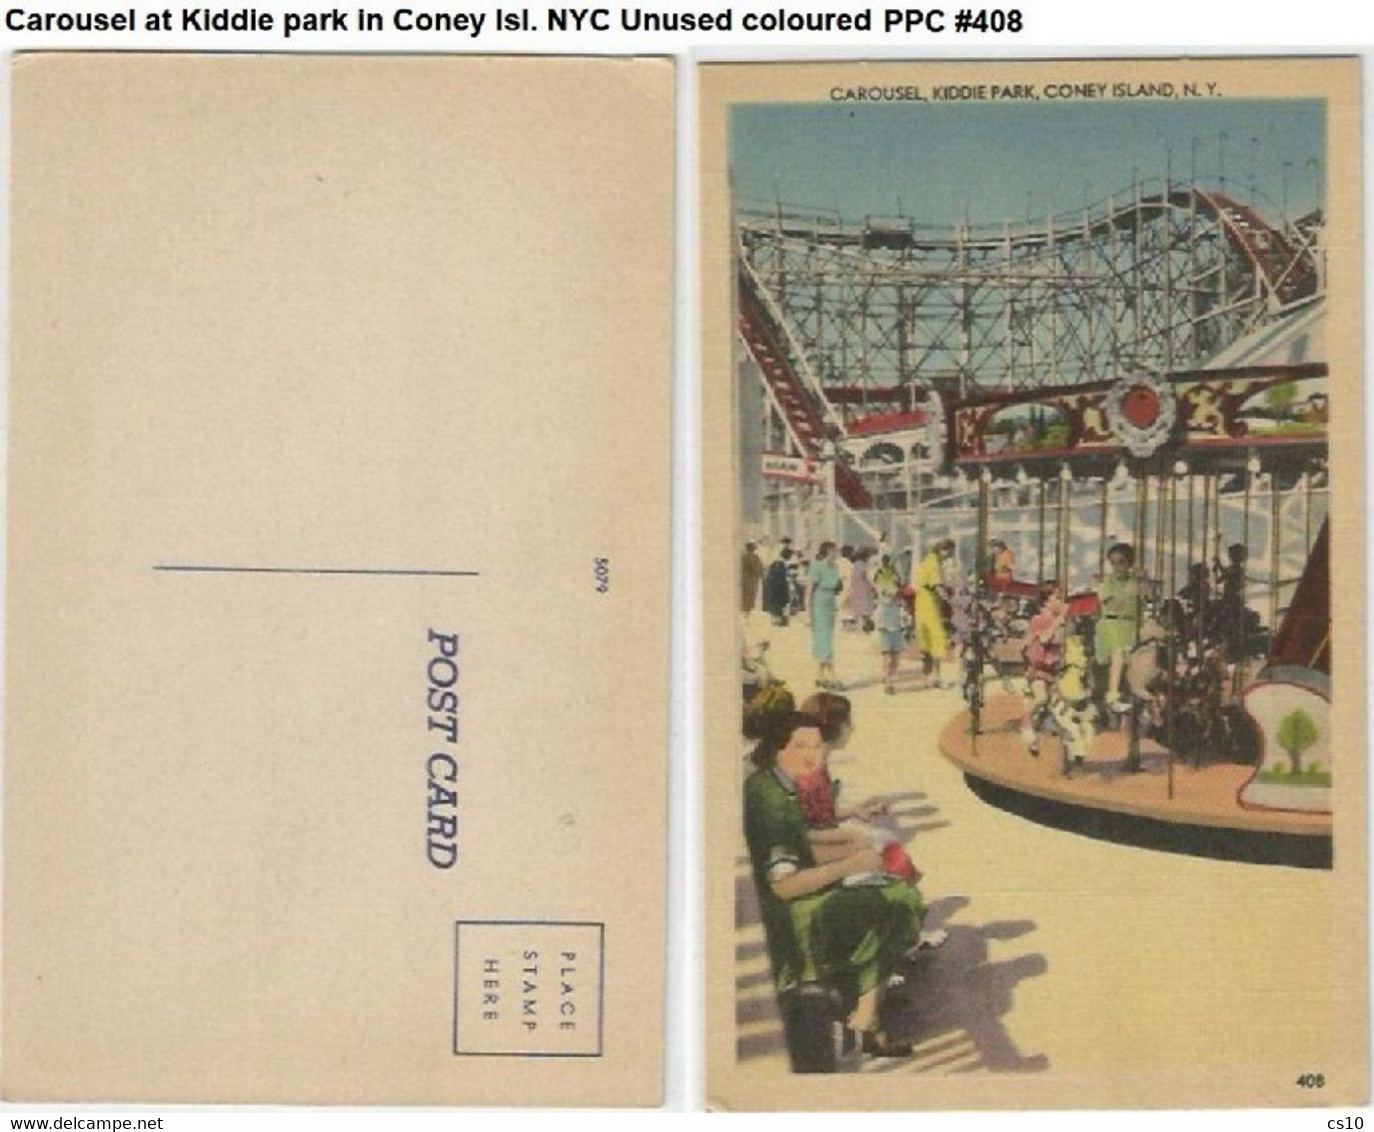 Carousel At Kiddie Park In Coney Isl. NYC Unused Coloured PPC #408 - Parques & Jardines